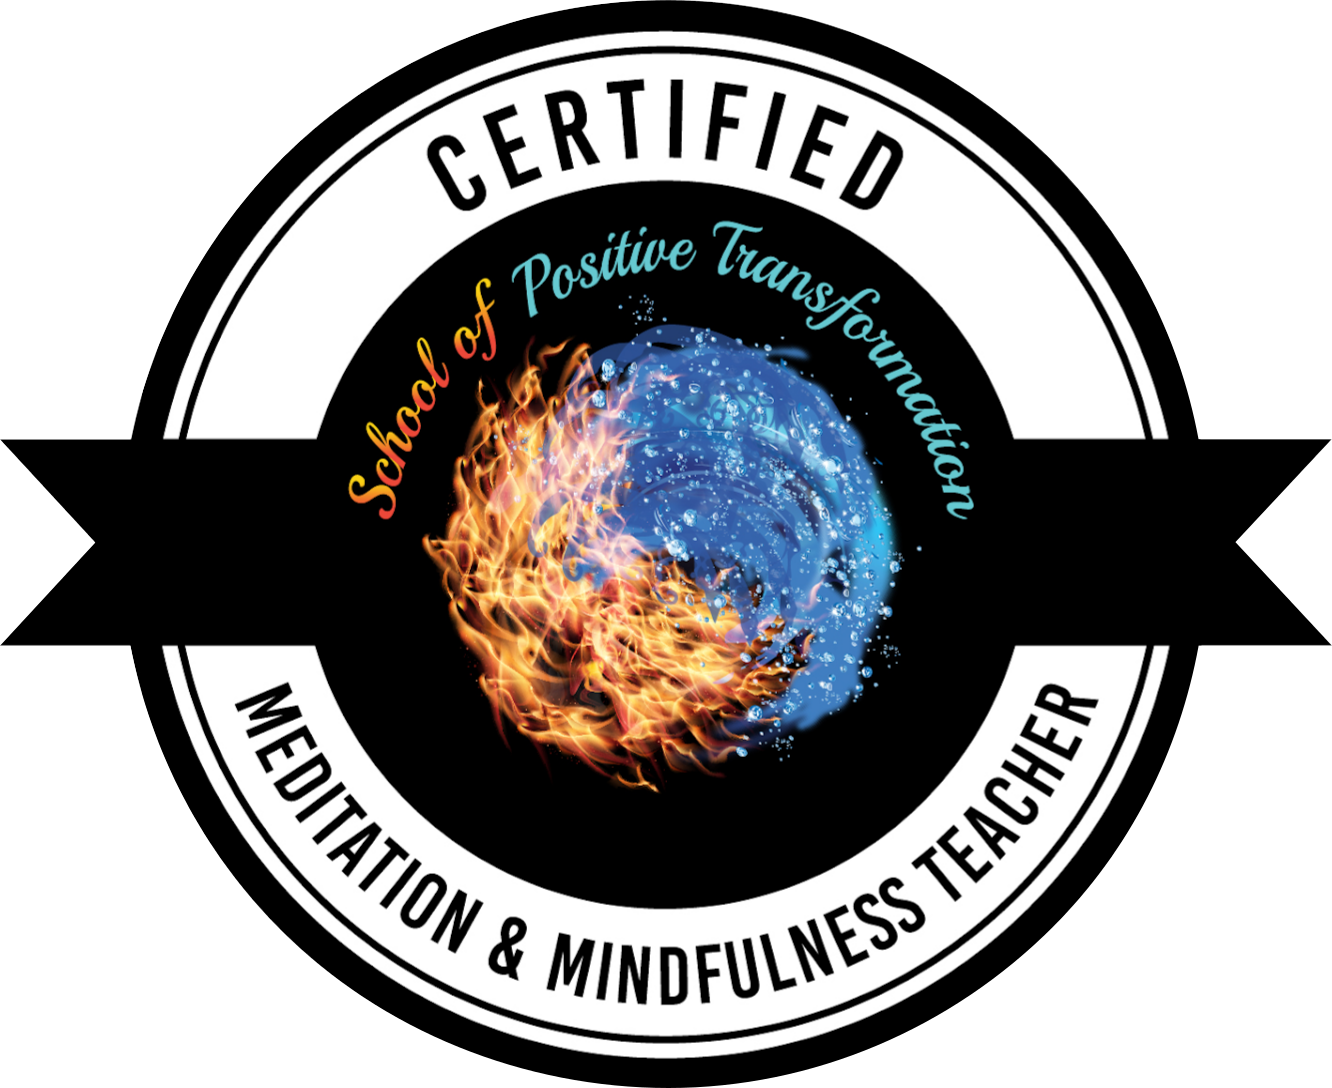 Meditation and Mindfulness Teacher Training Certificate